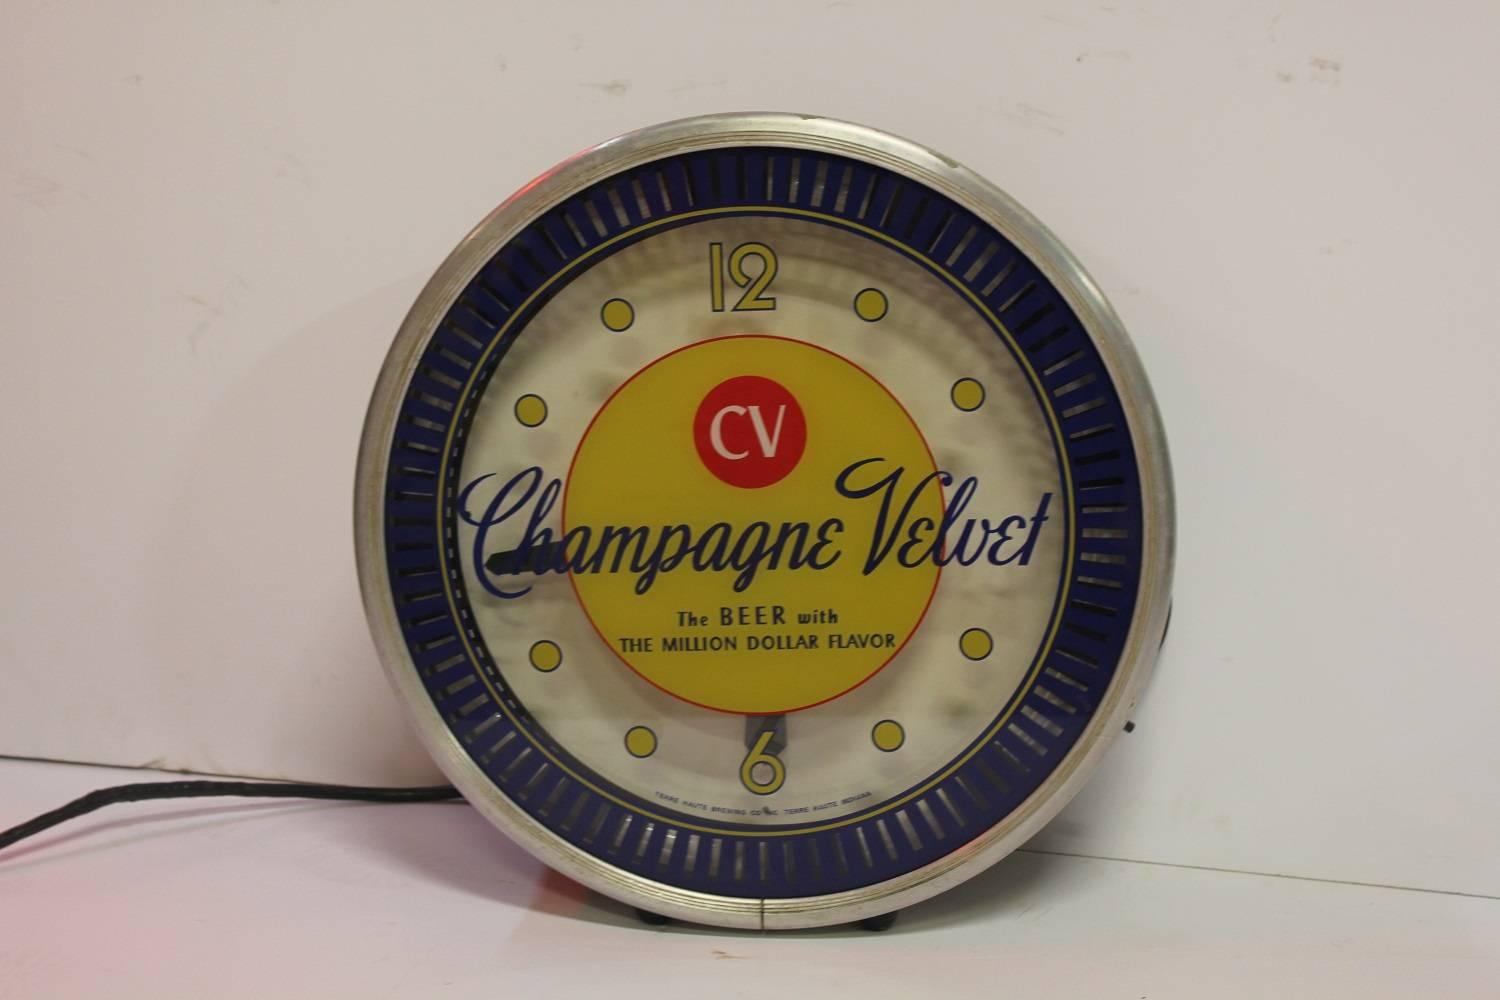 1950s neon spinner advertising clock champagne velvet beer. In working condition. Measures: Depth 6.5